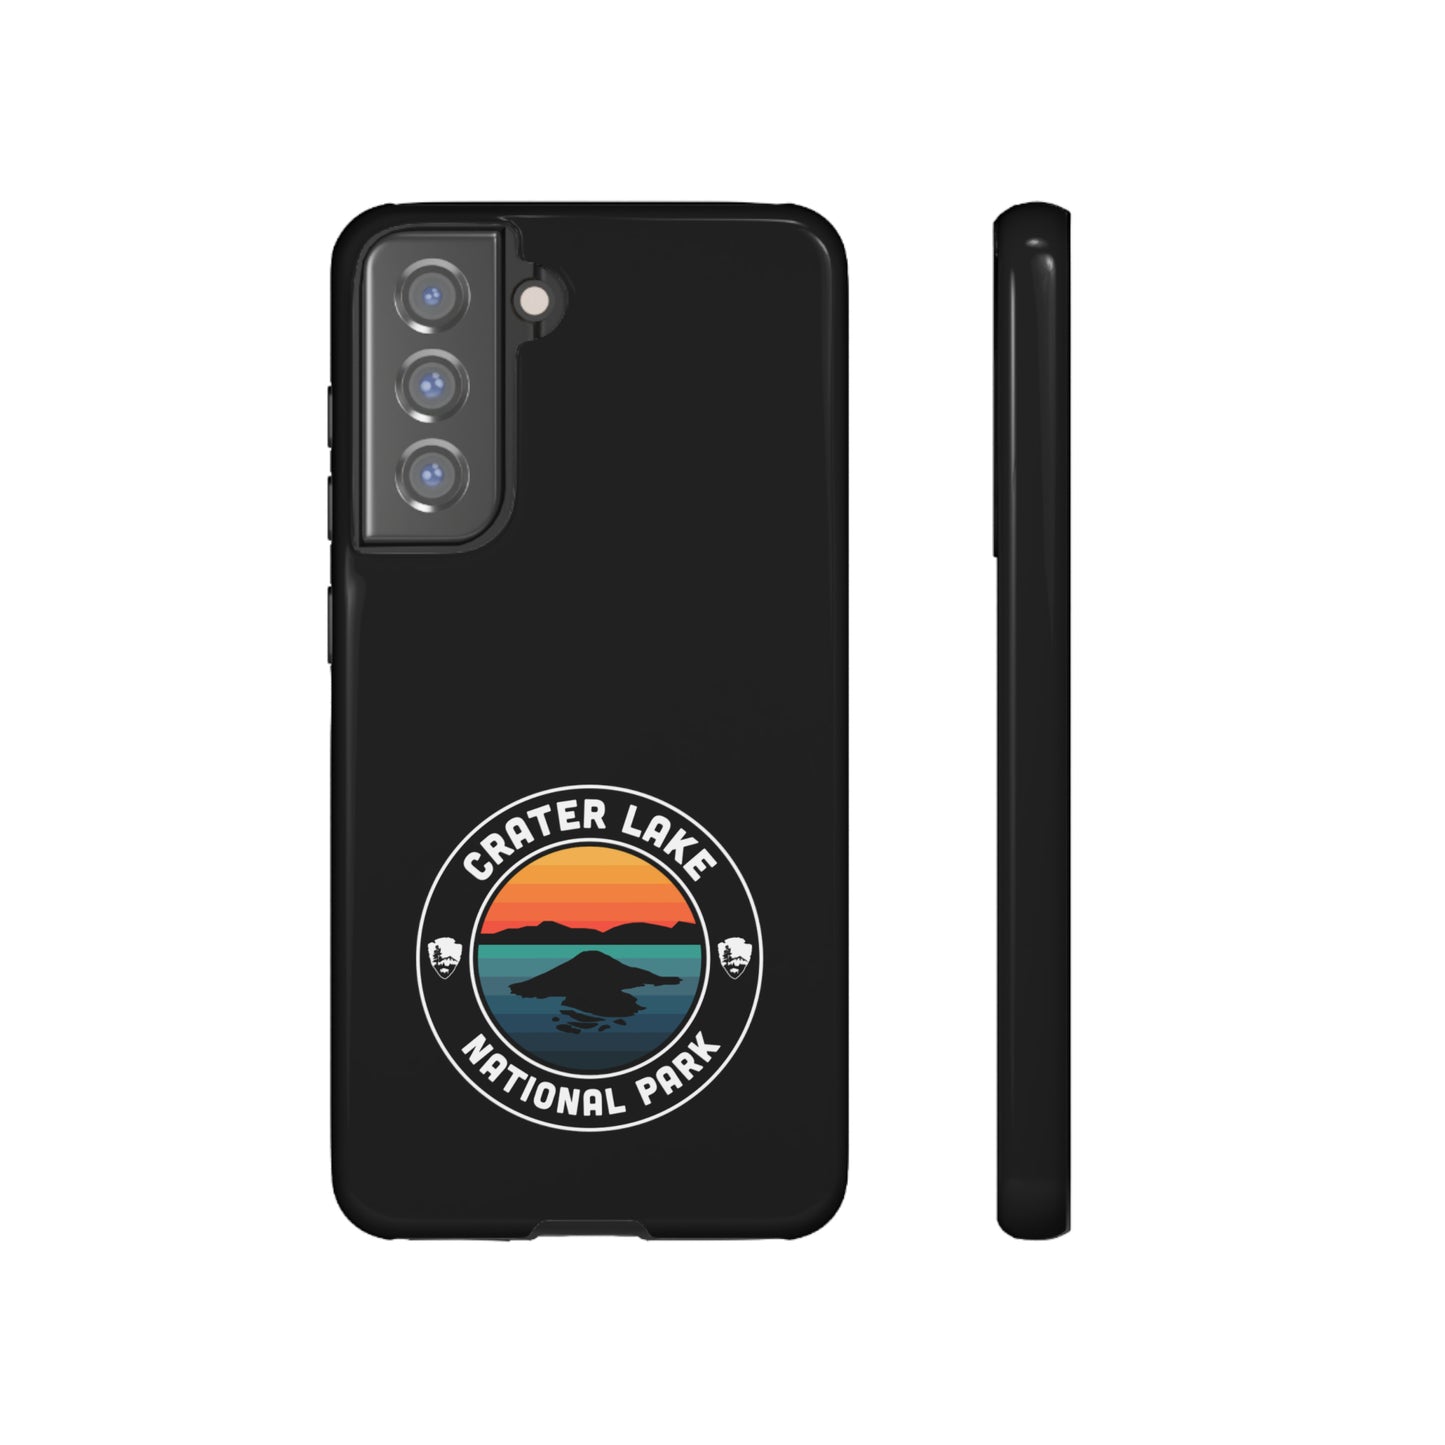 Crater Lake National Park Phone Case - Round Emblem Design